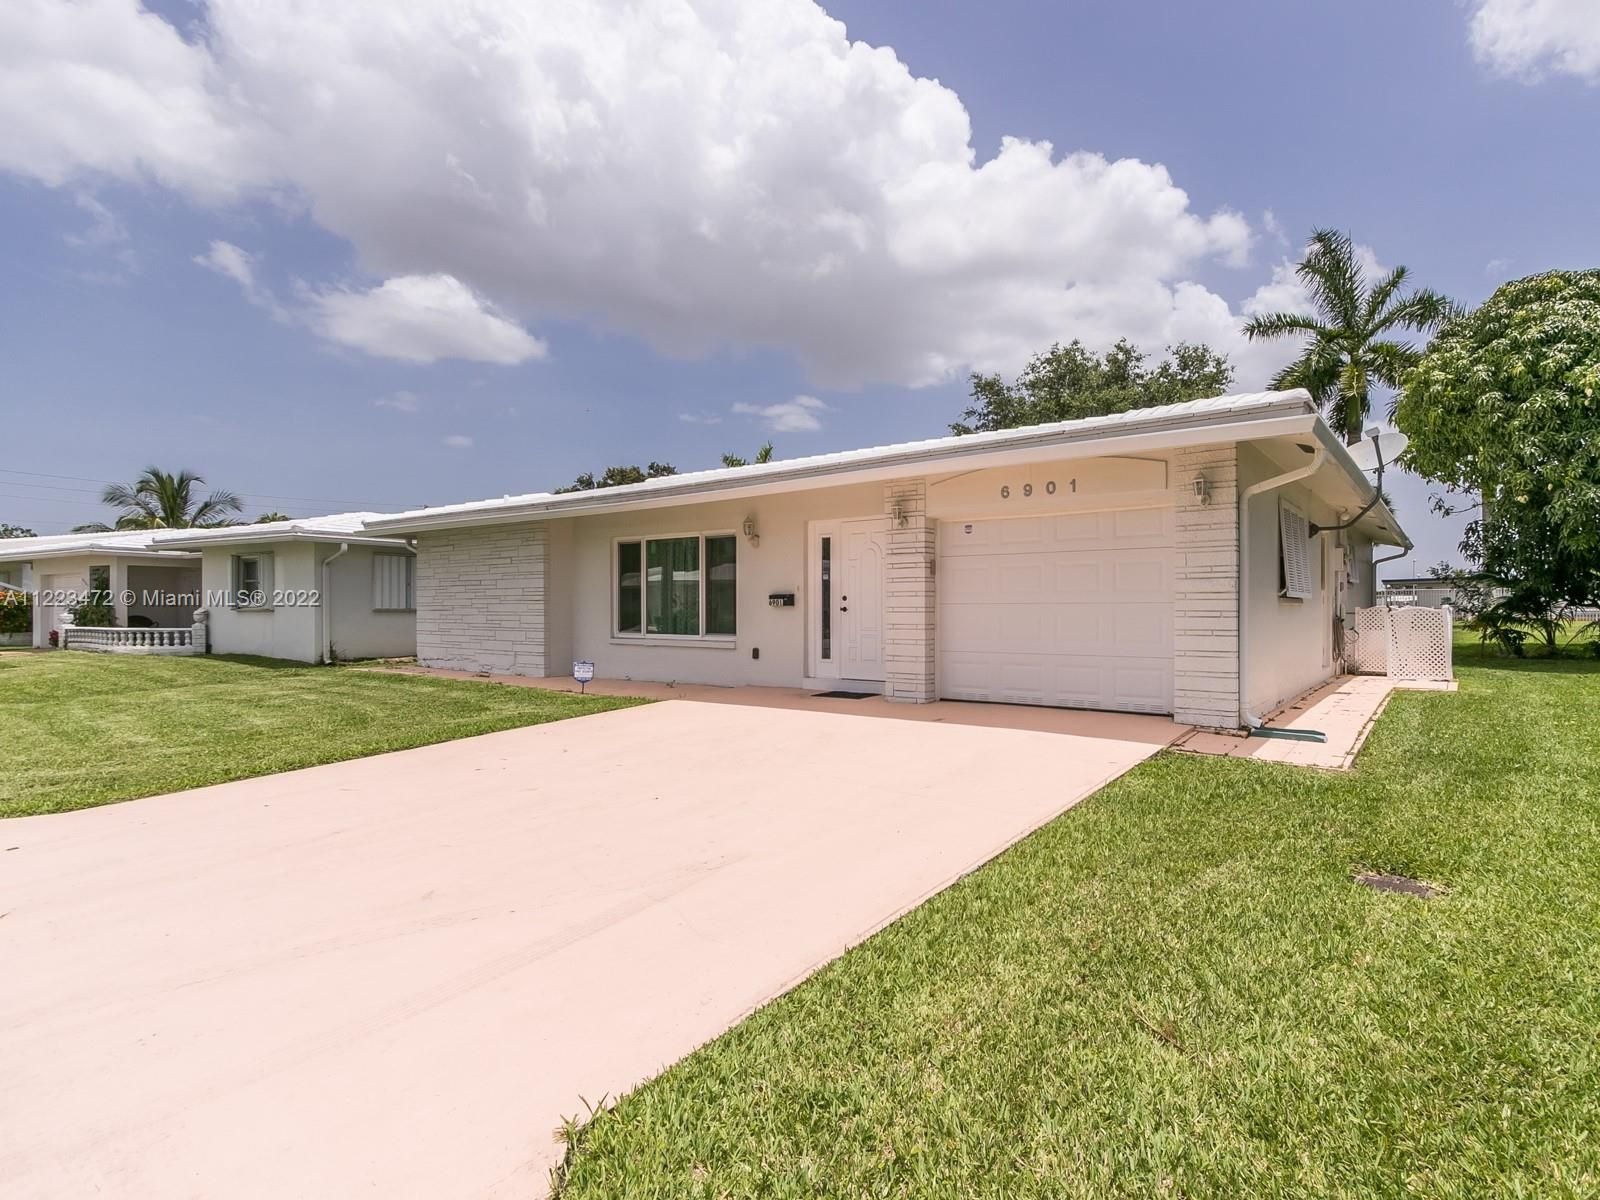 Real estate property located at 6901 70th St, Broward County, Tamarac, FL